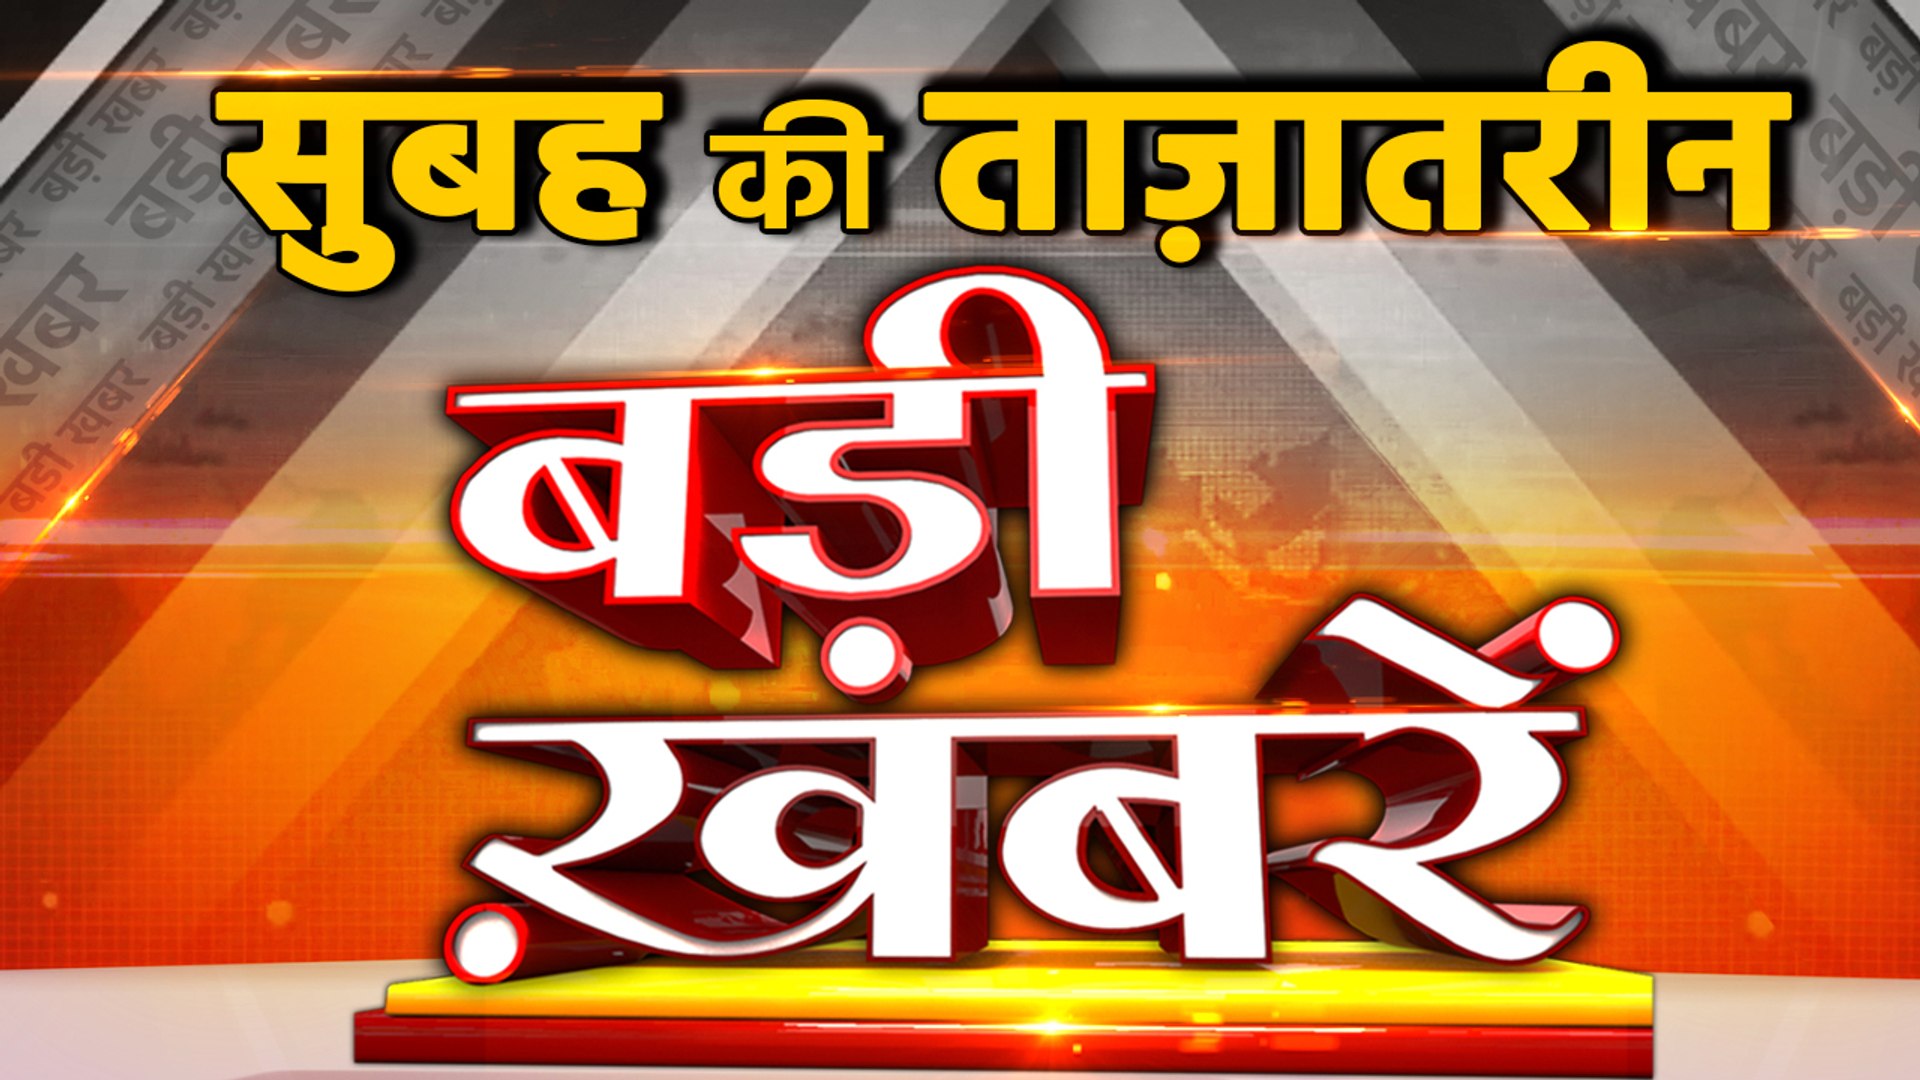 Big News Today In Hindi